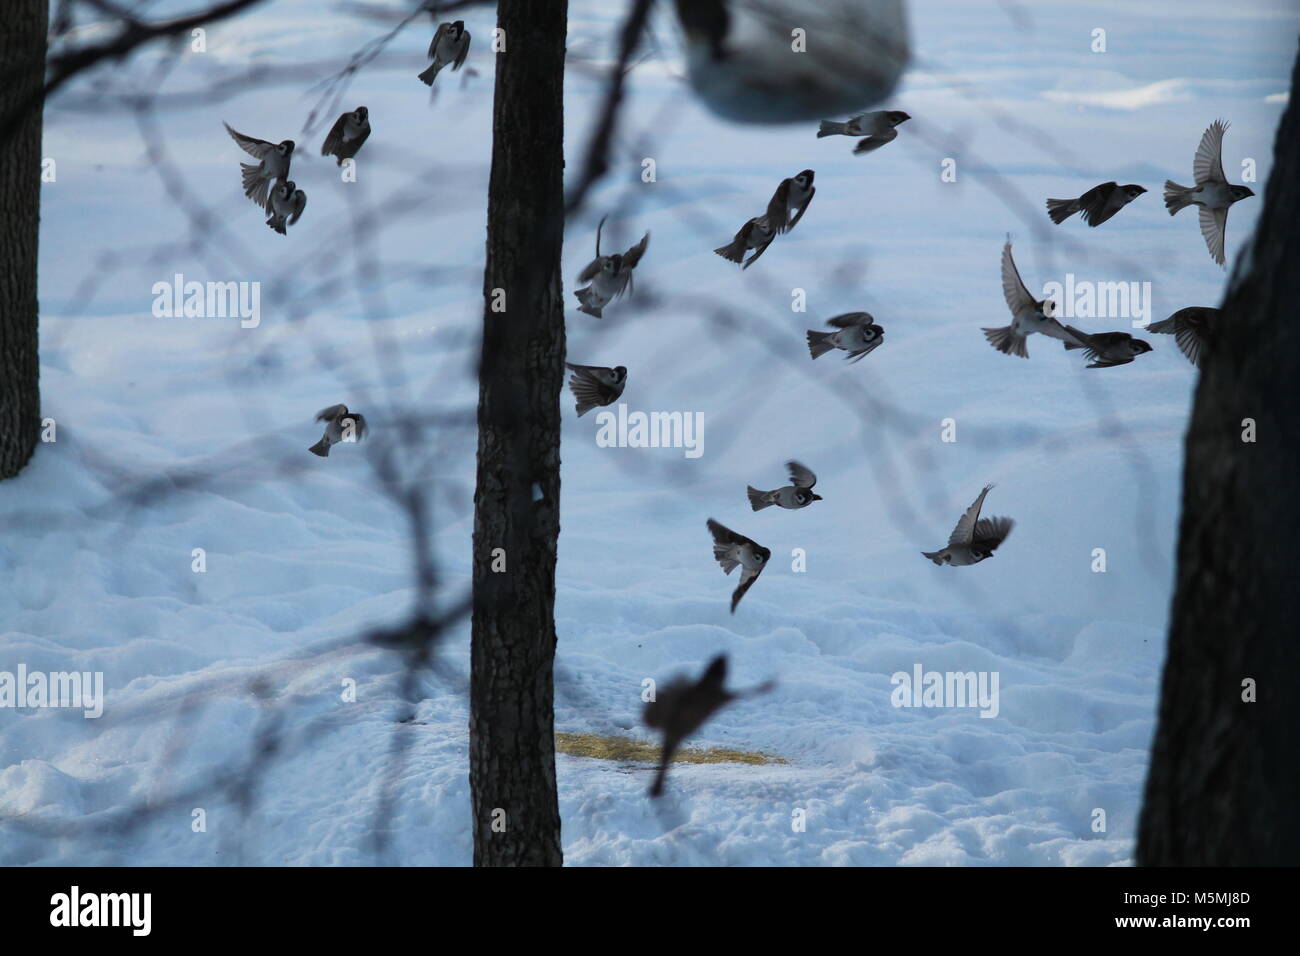 vivid family of sparrow bird fly in the air look like dance Stock Photo